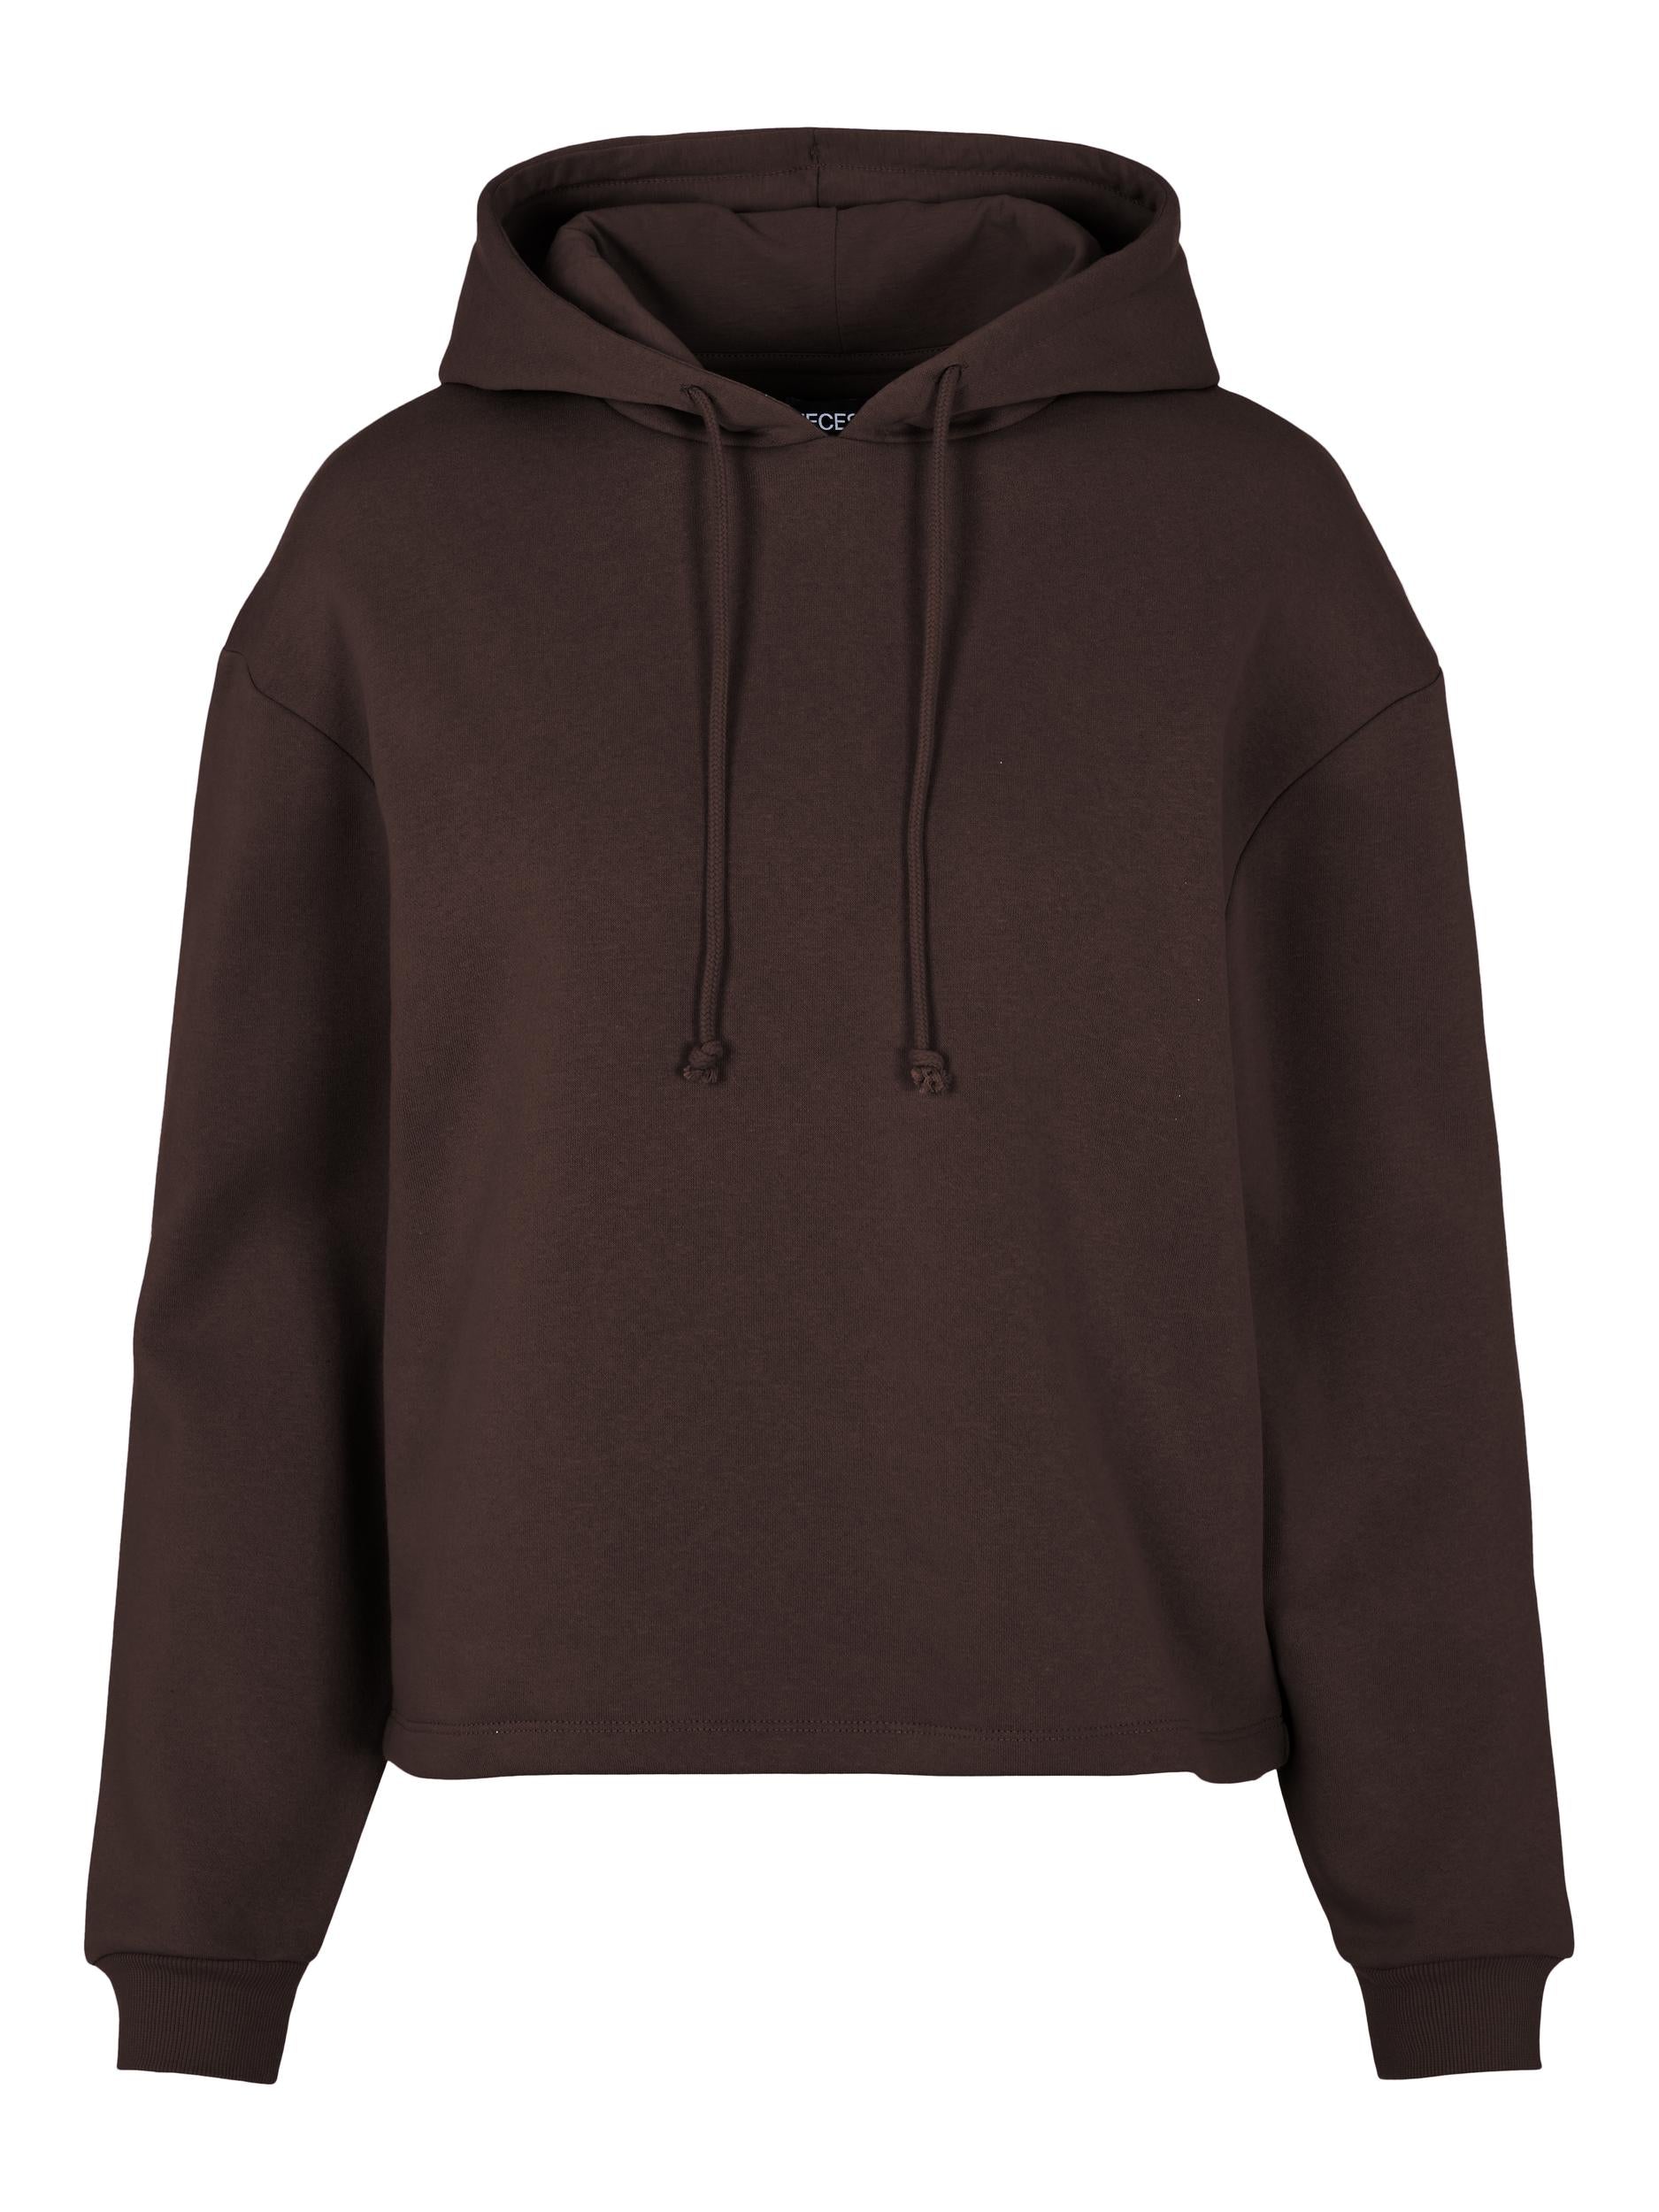 Pieces basic brown sweatshirt with hood